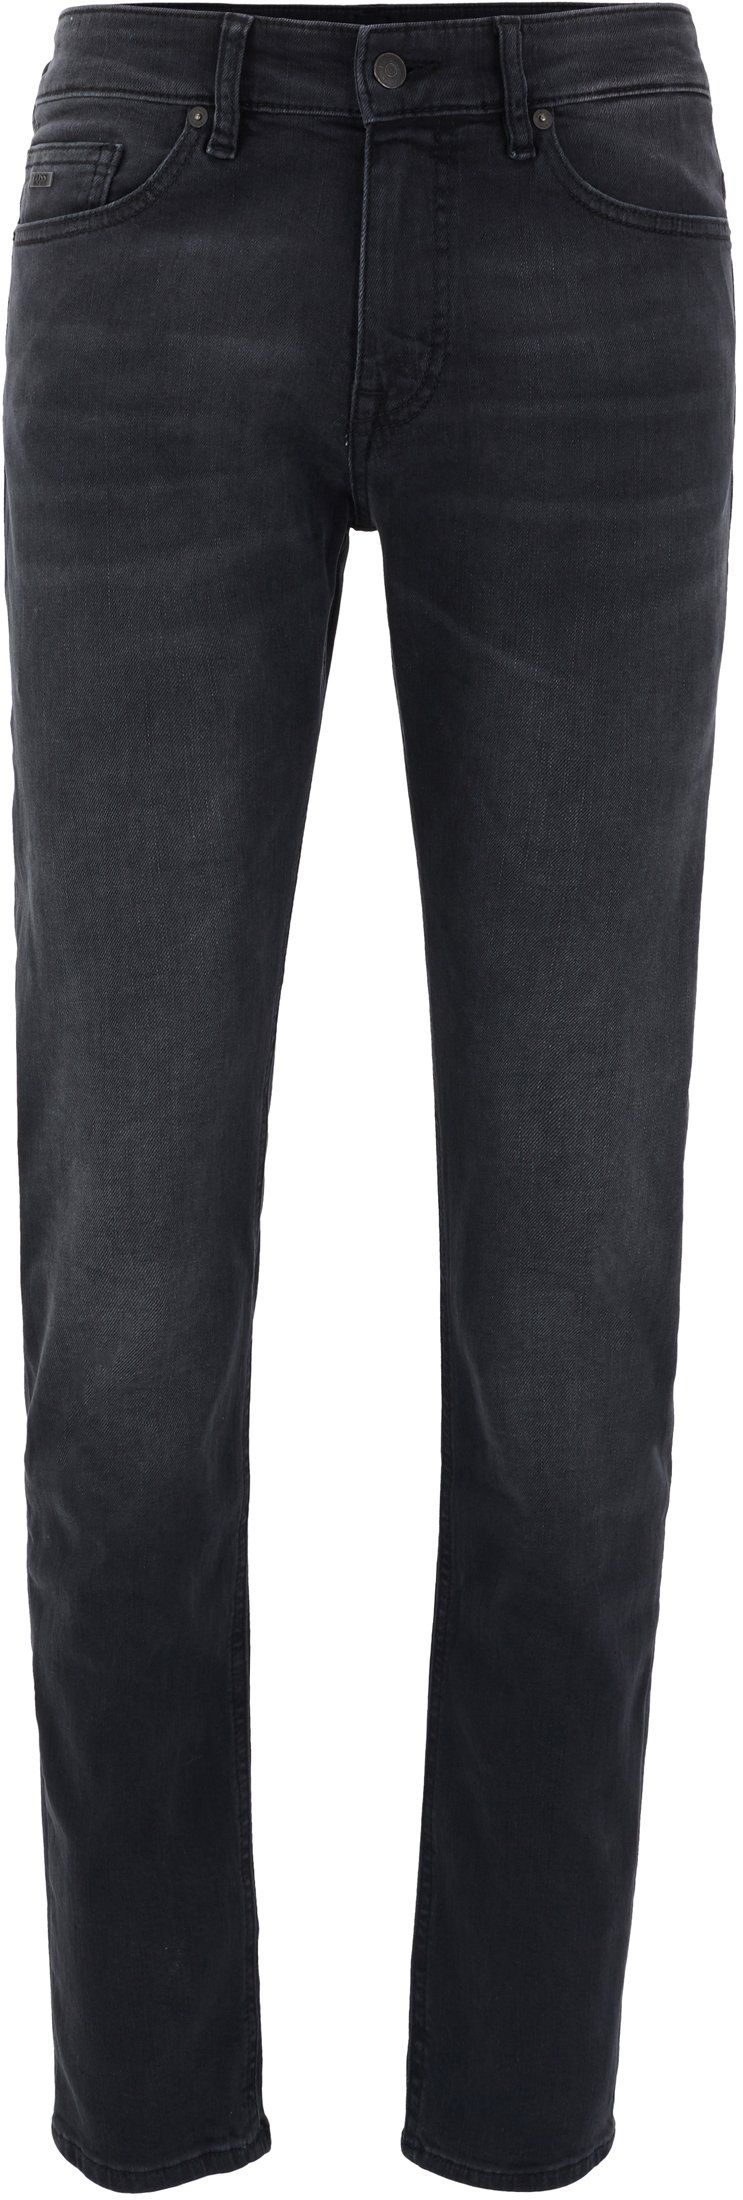 Hugo Boss Delaware Jeans Black size W 32